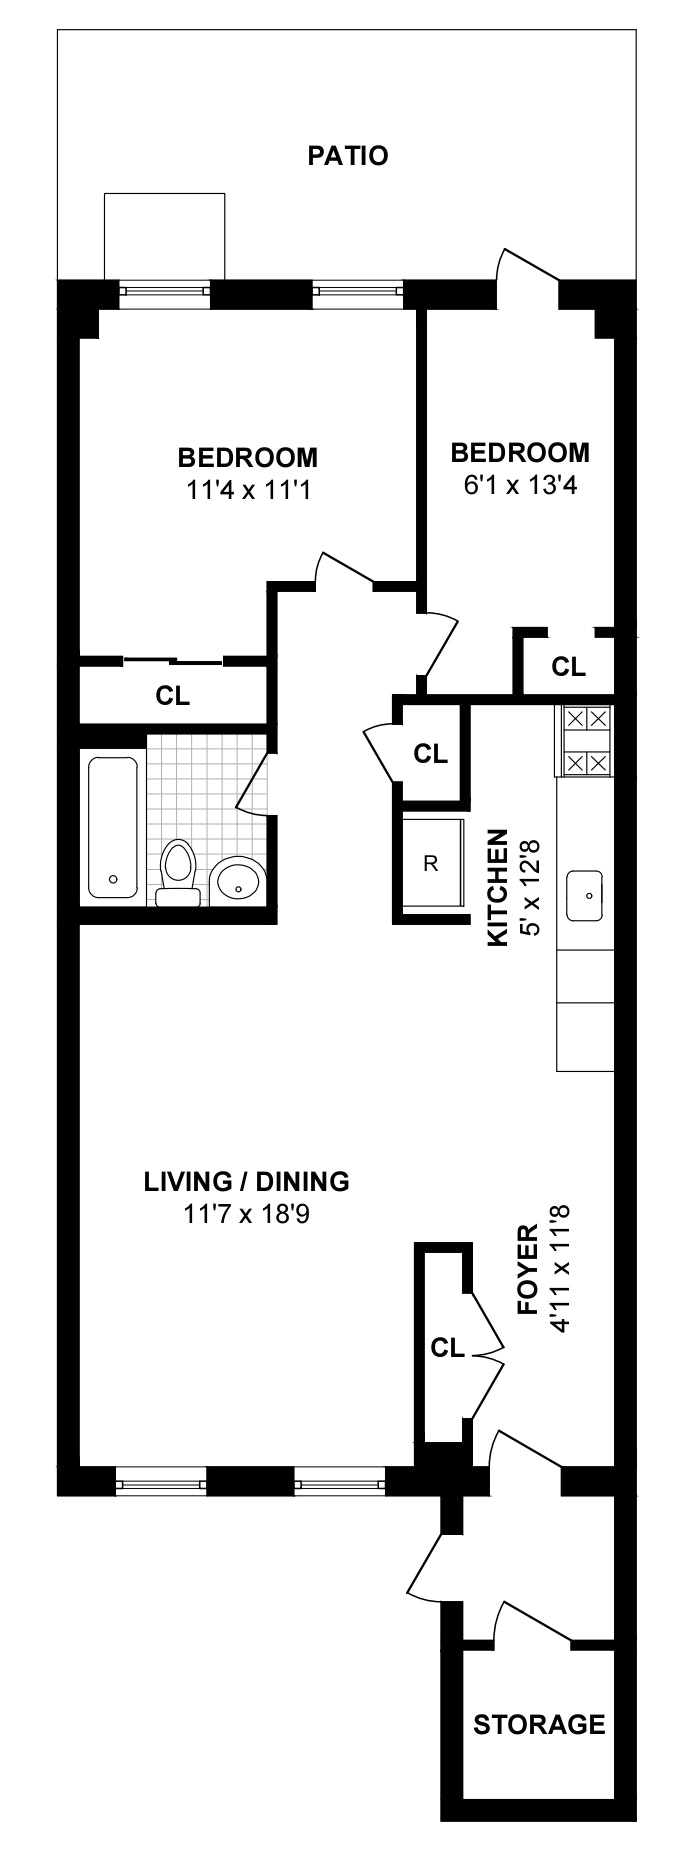 Floorplan for 246 Sackett Street, 1